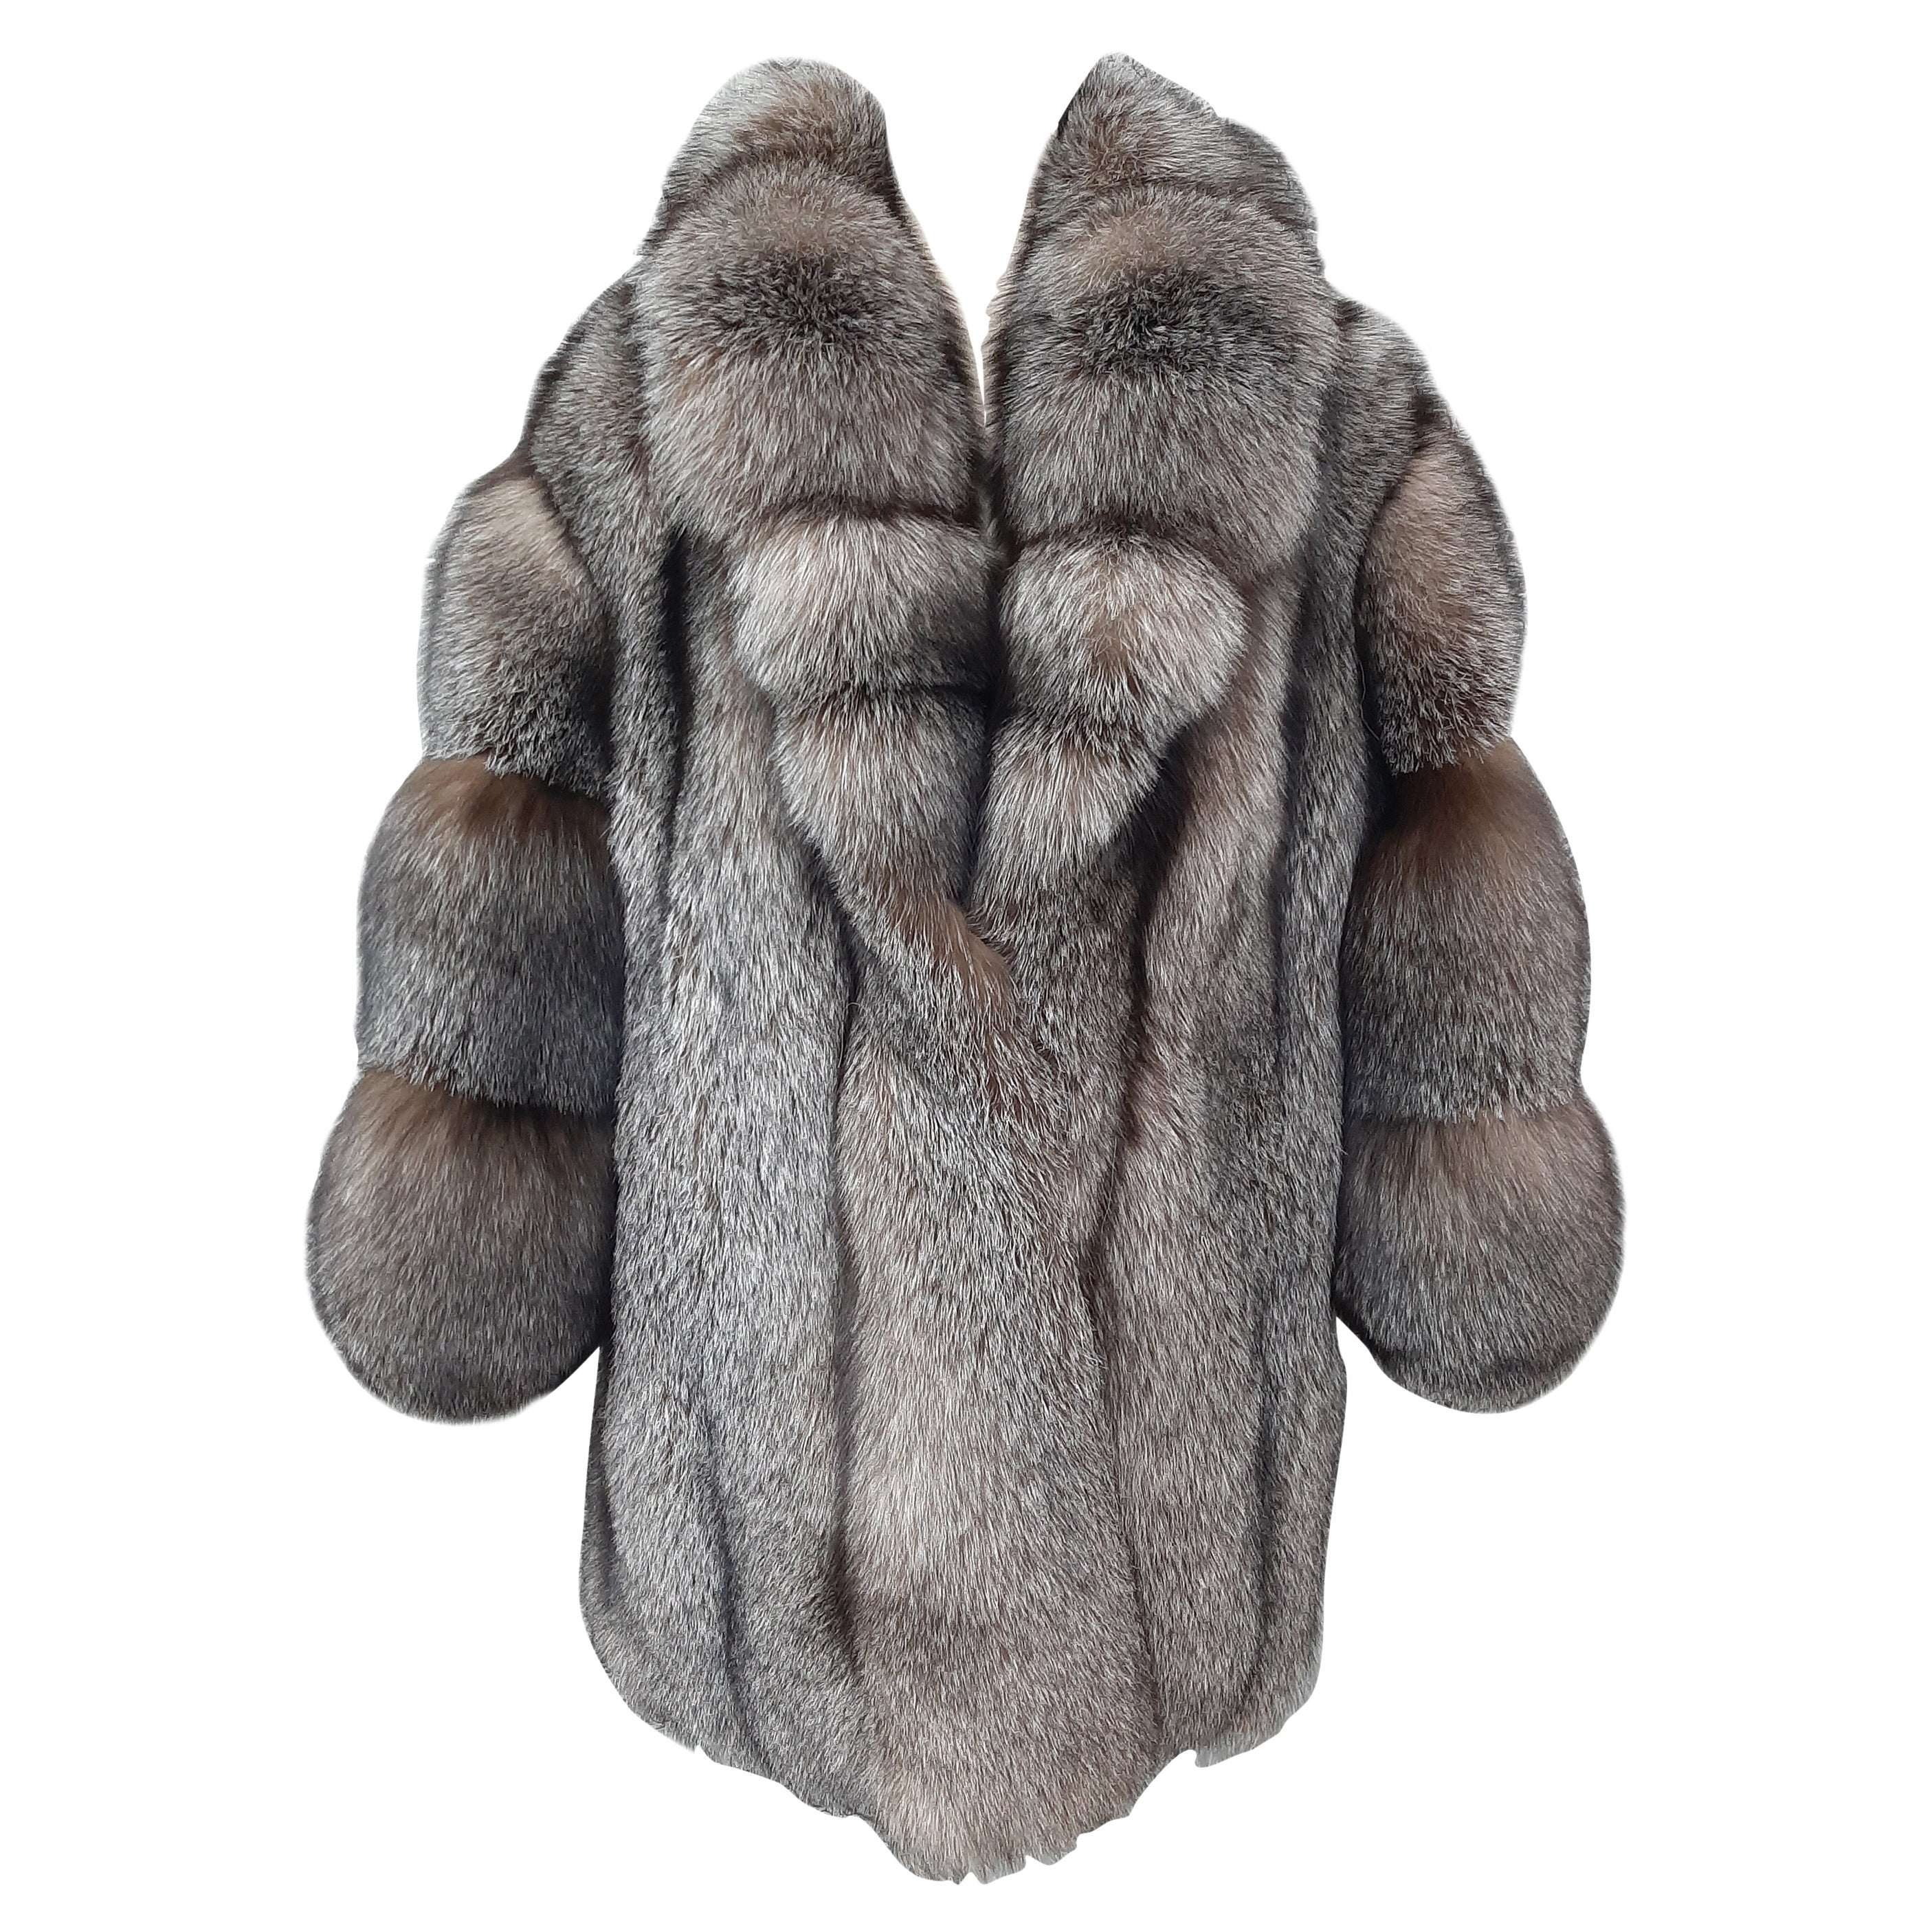 Brand new crystal fox fur coat size 20